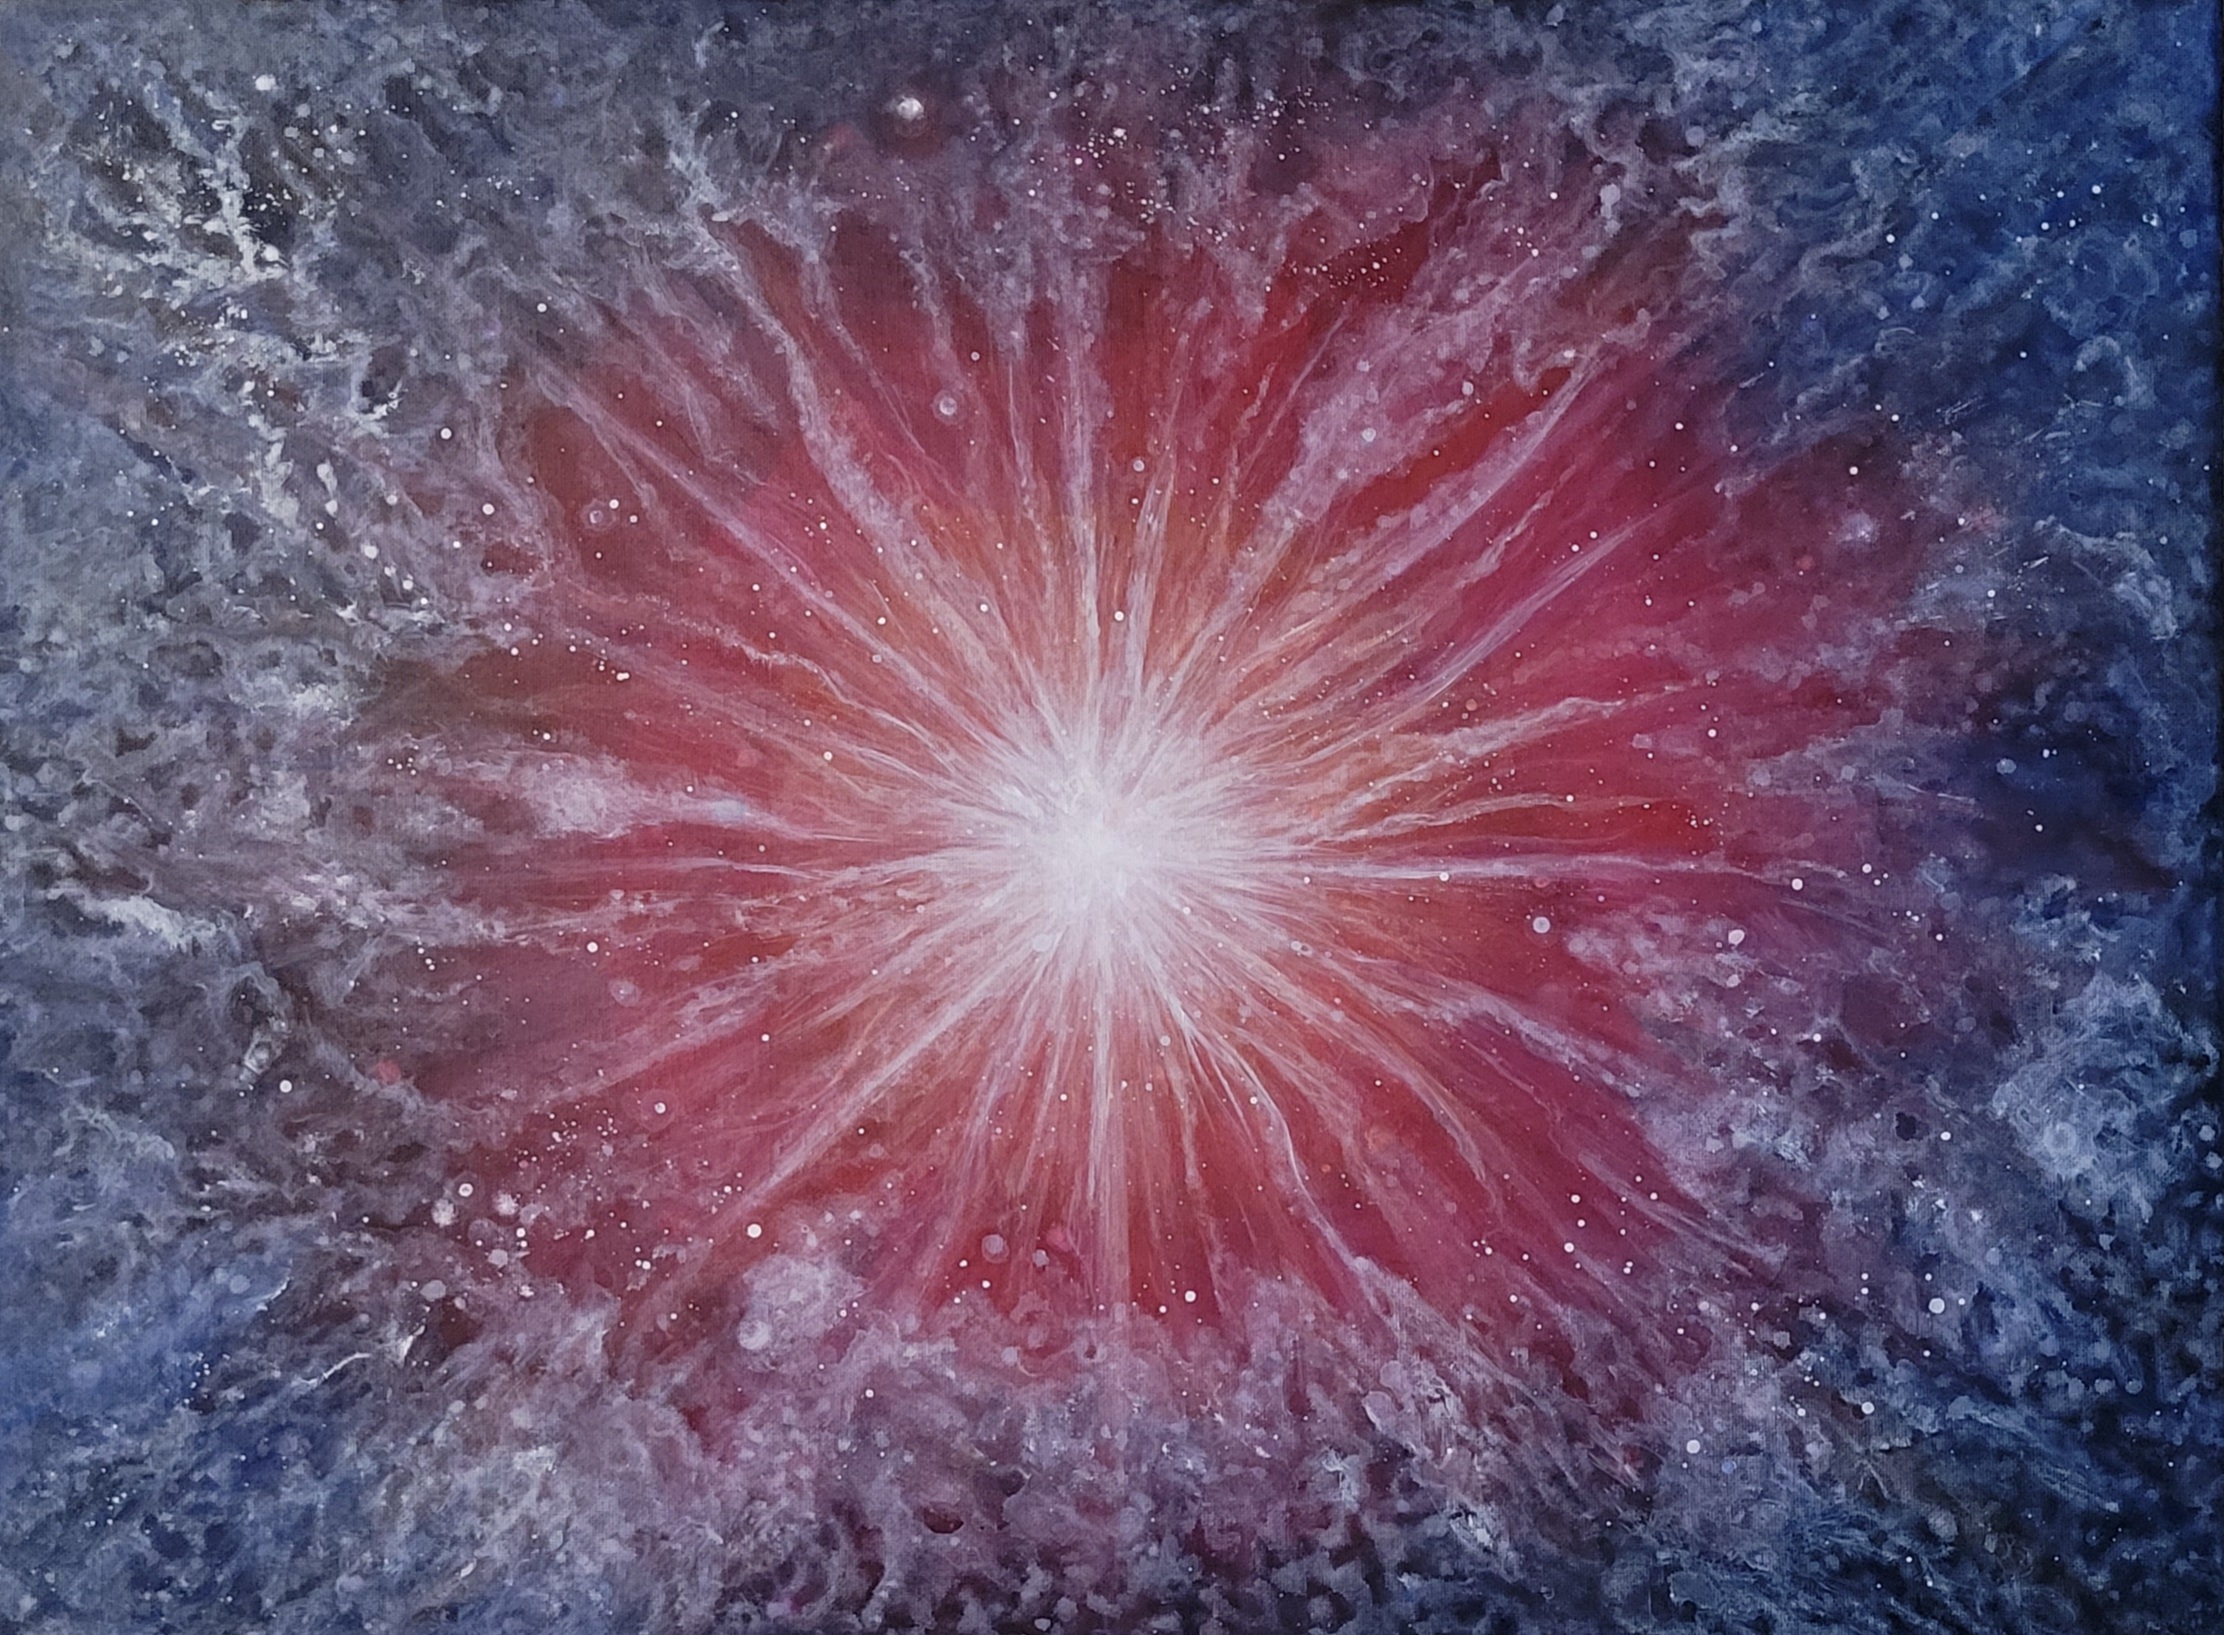 Interstellar Mycelium